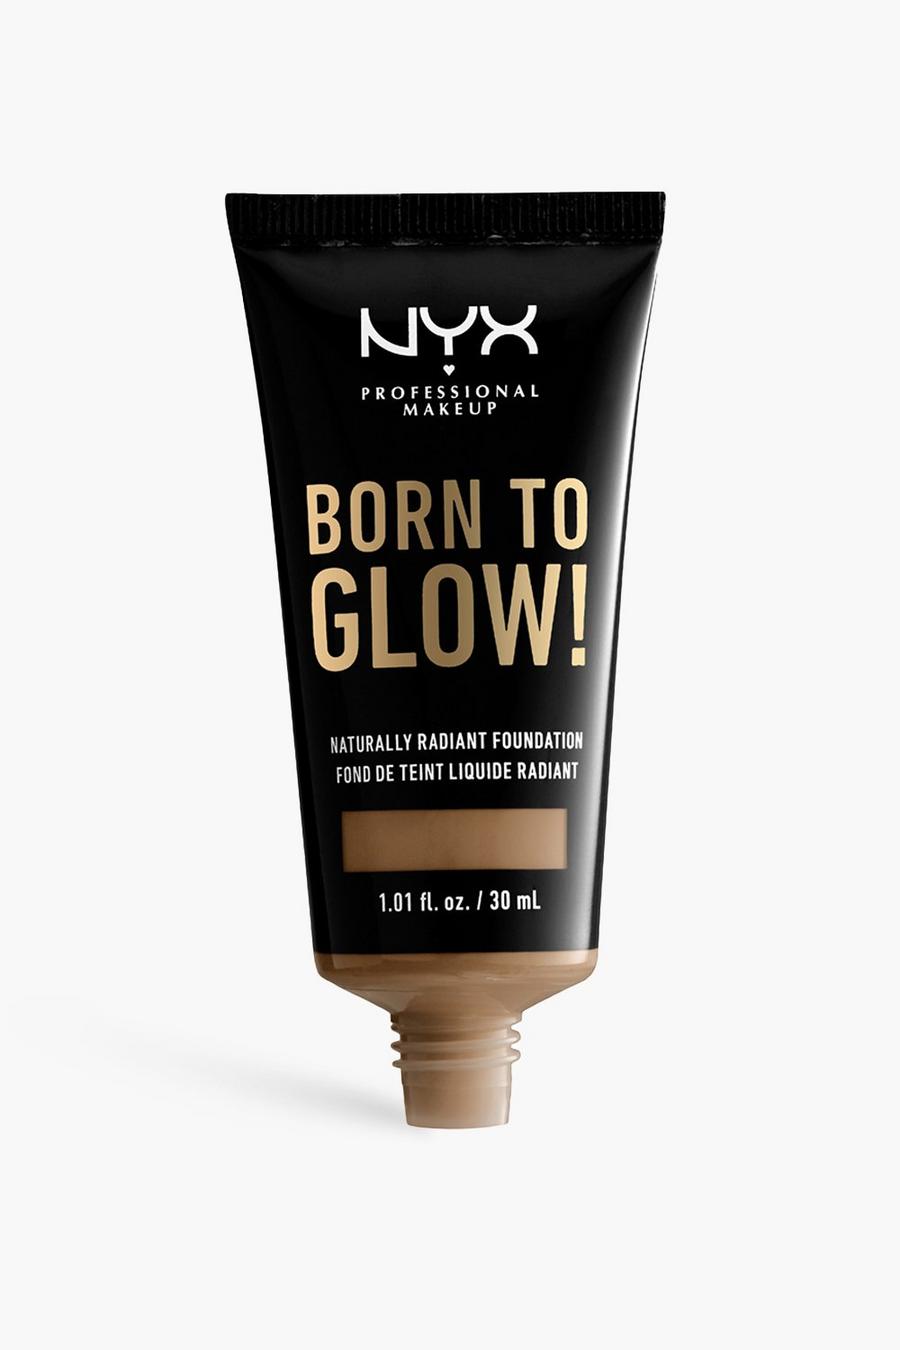 NYX Professional Makeup - Fond de teint radiance naturelle - Born To Glow!, 16 mahogany image number 1